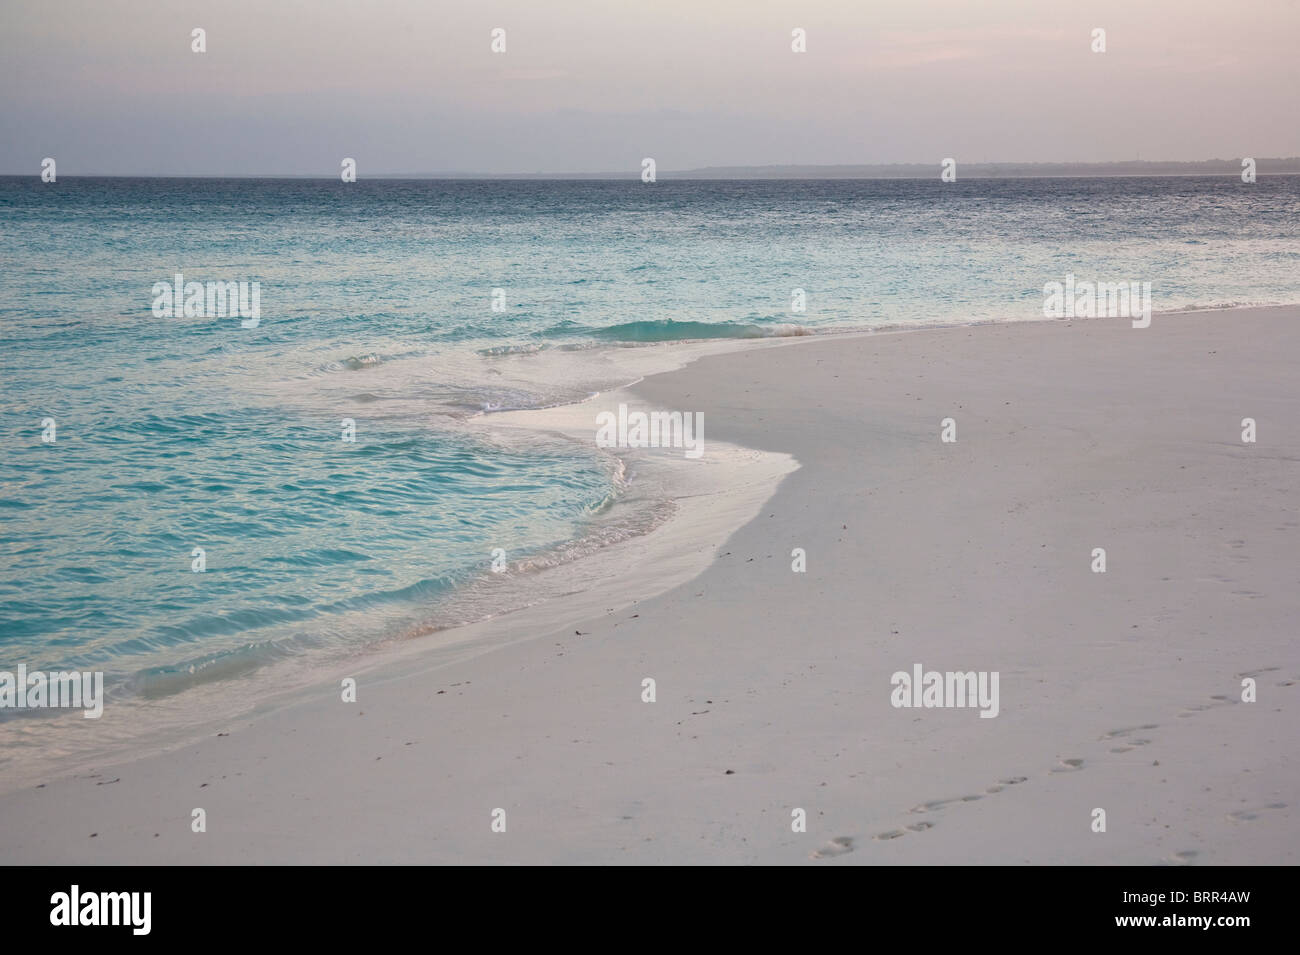 Tropical Island beach scene at dusk Stock Photo